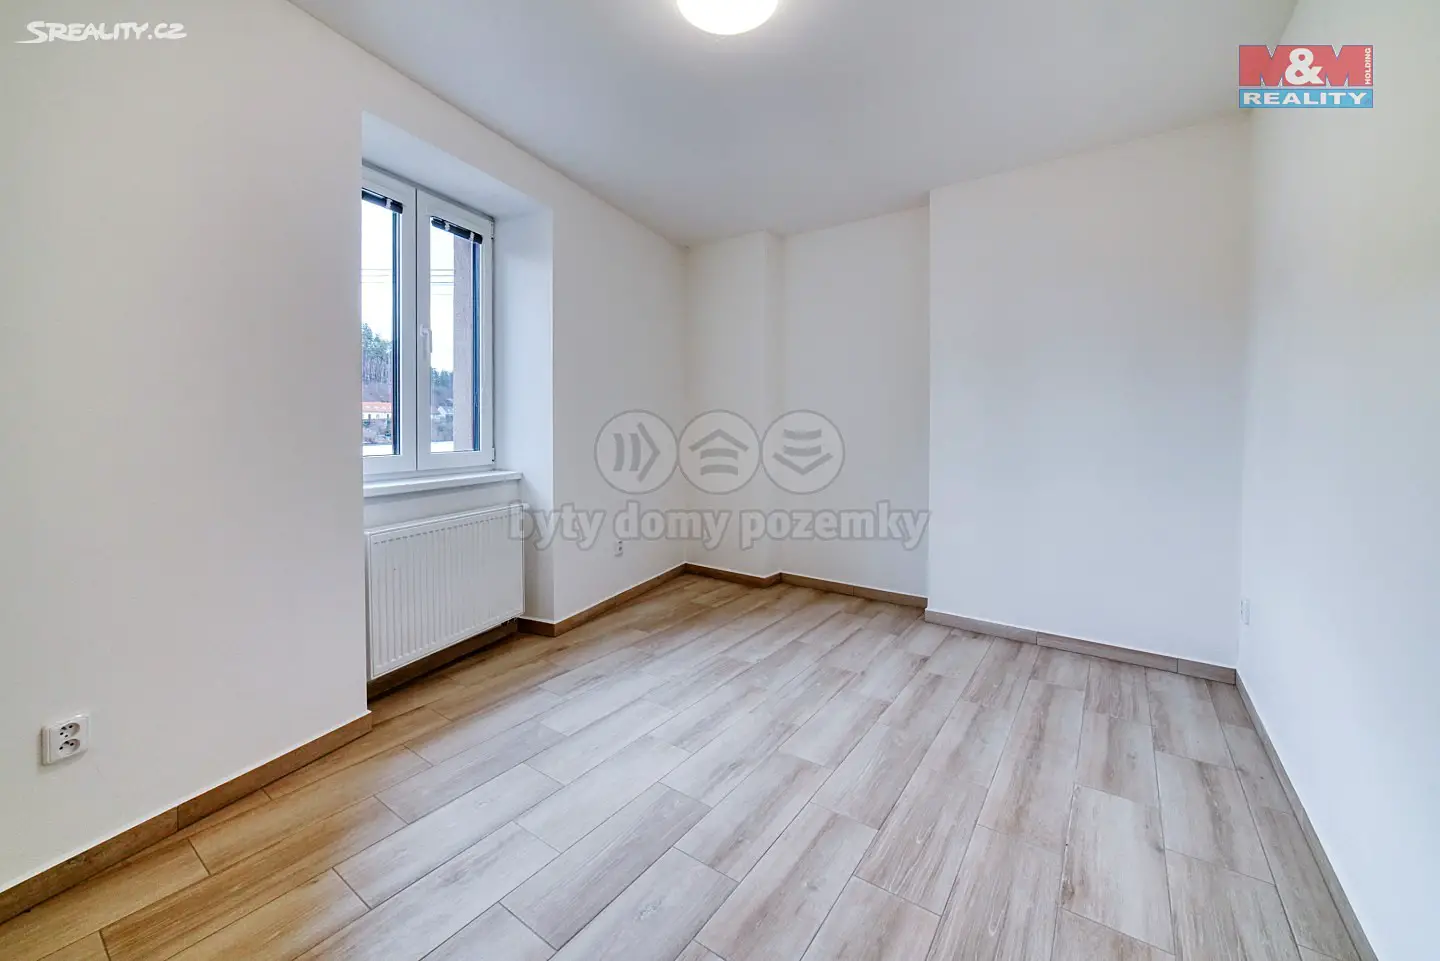 Pronájem bytu 2+1 58 m², Žinkovy, okres Plzeň-jih